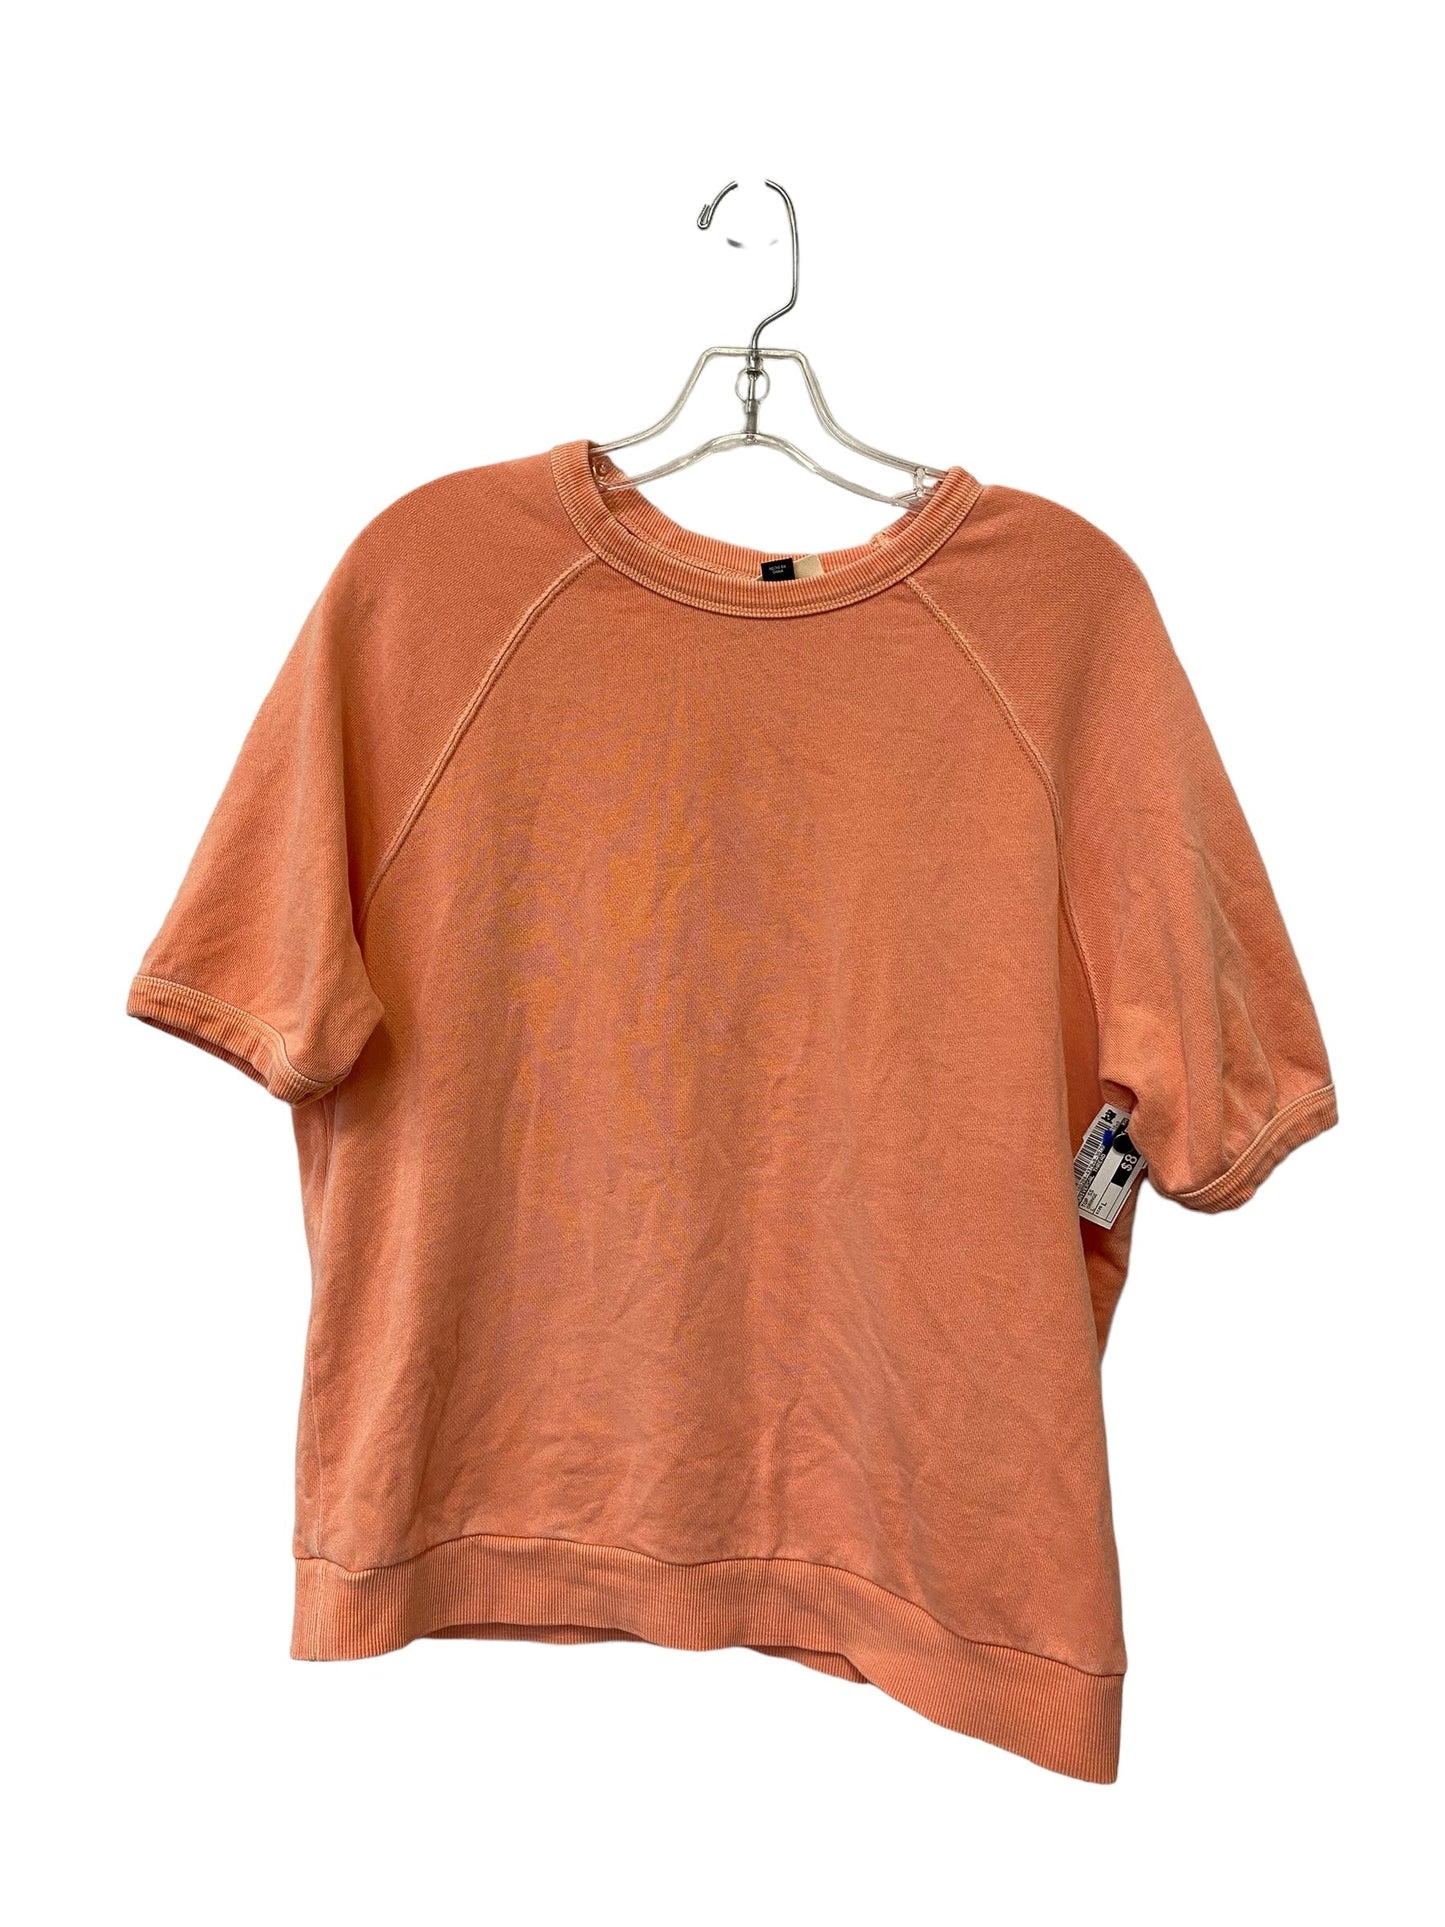 Orange Top Short Sleeve Universal Thread, Size L